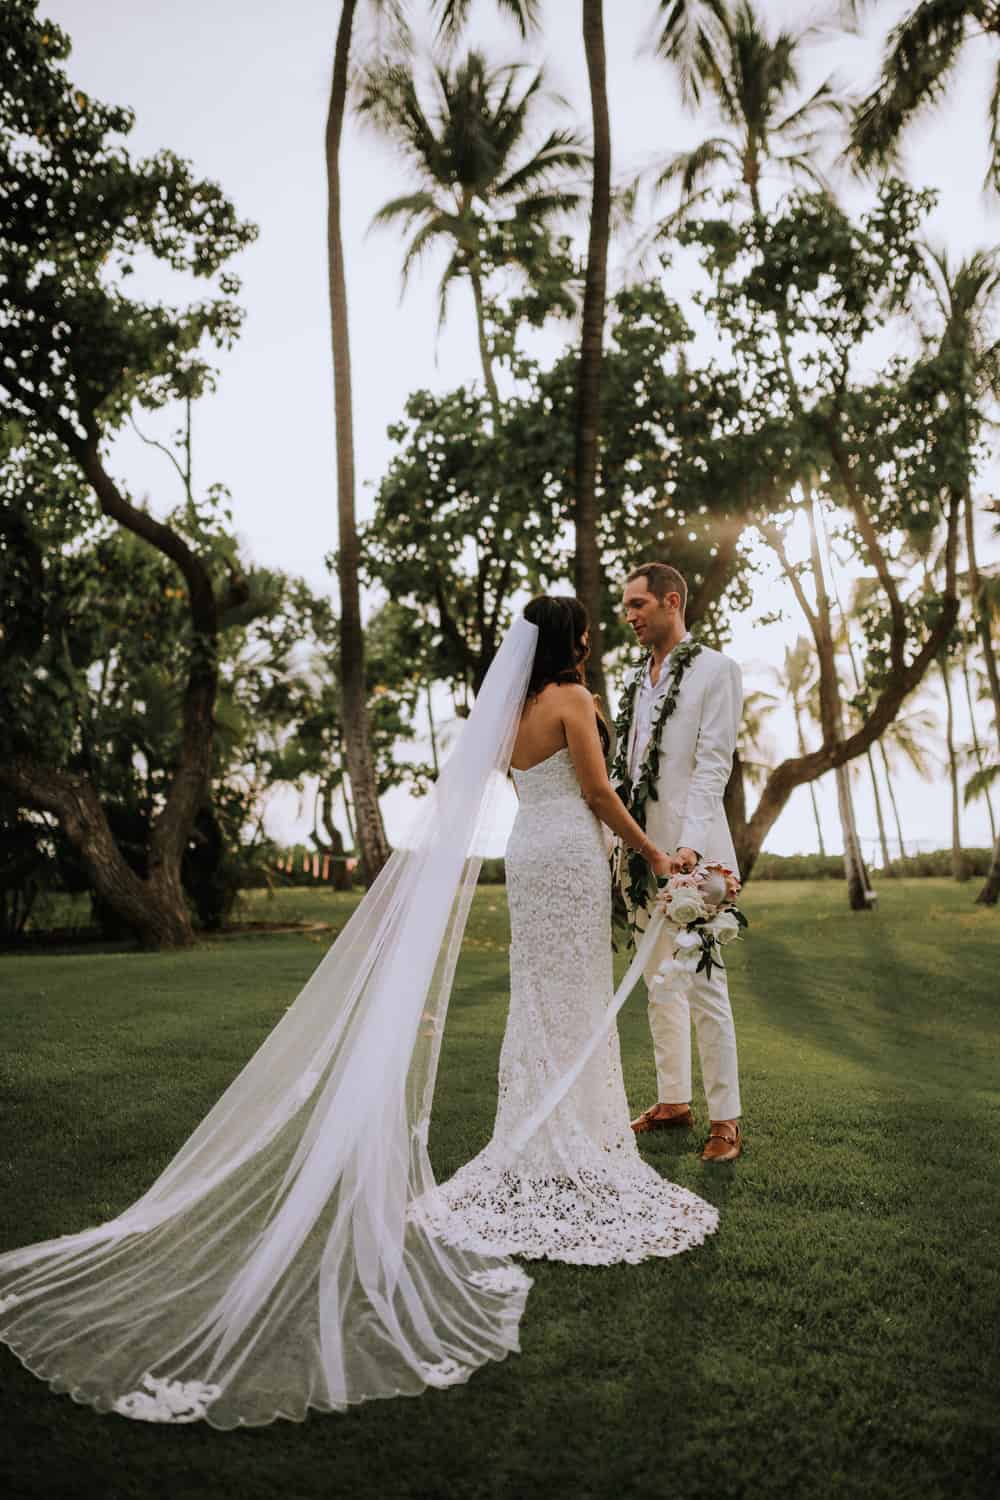 HAIKU MILL HAWAII WEDDING PHOTO SERVICES